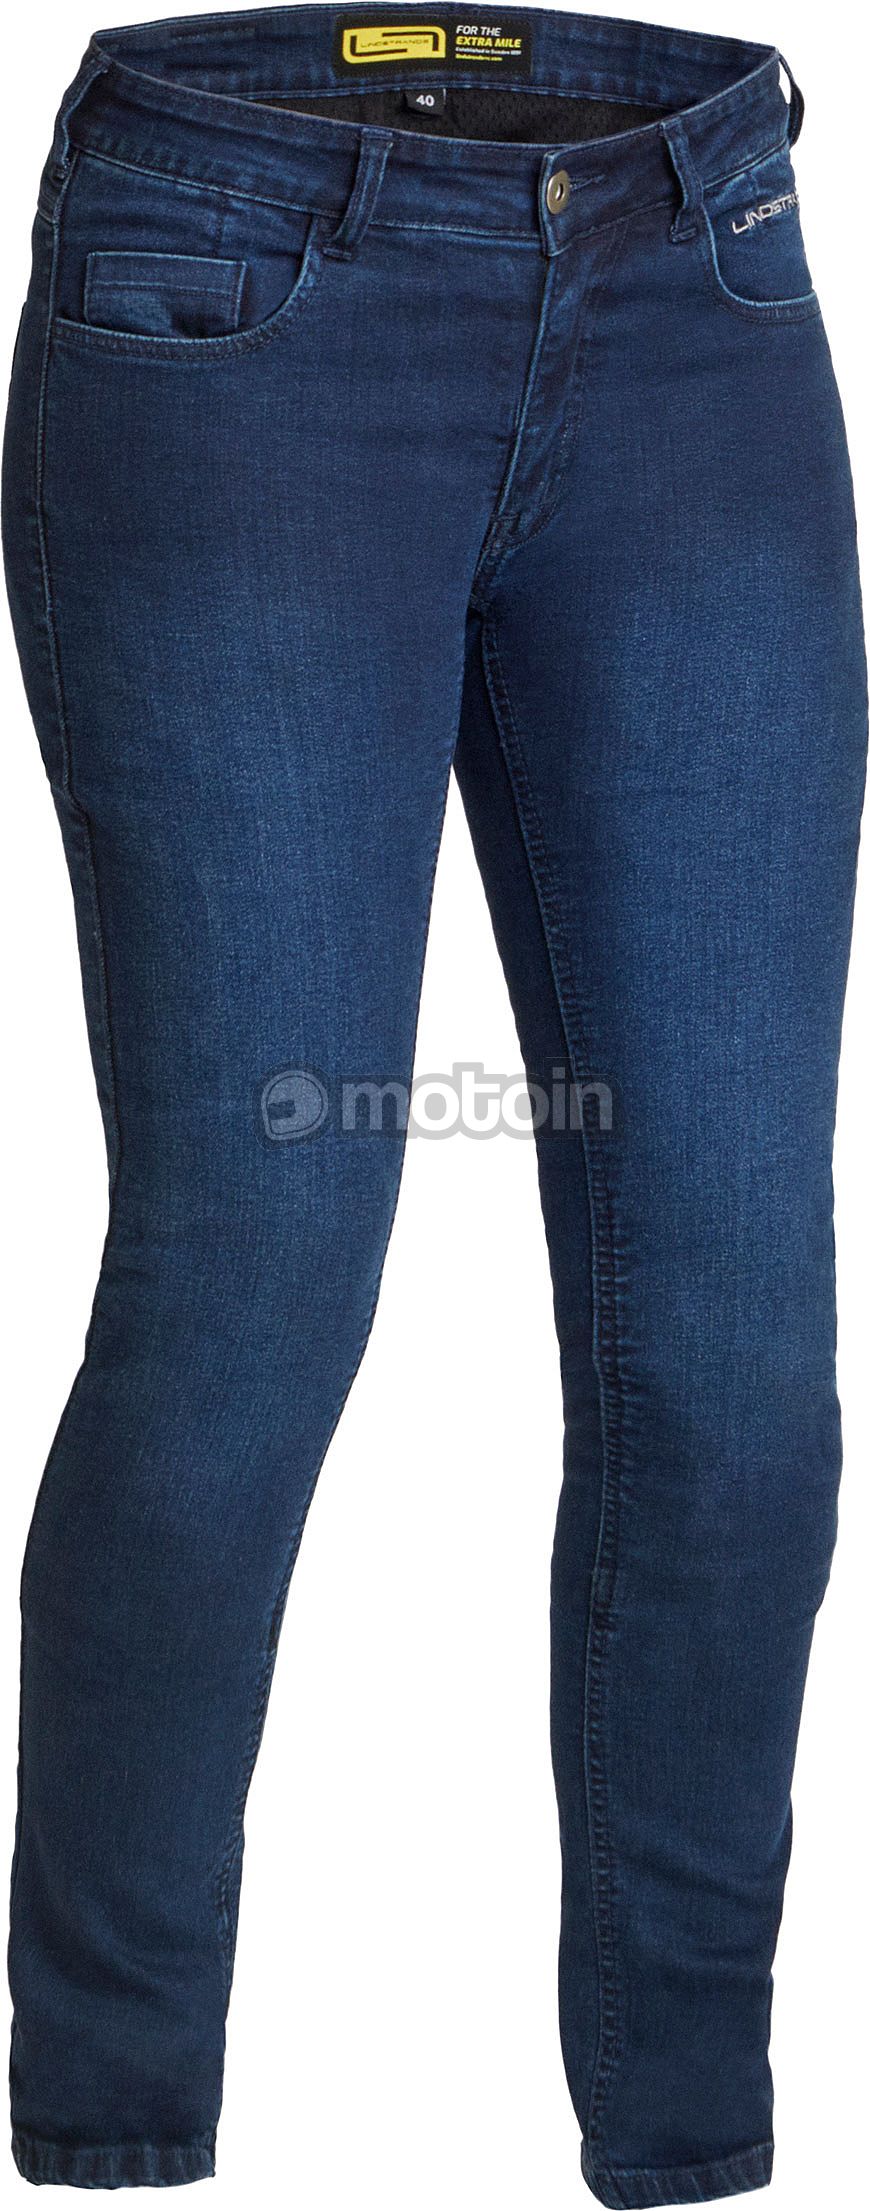 Lindstrands Rone, jeans women